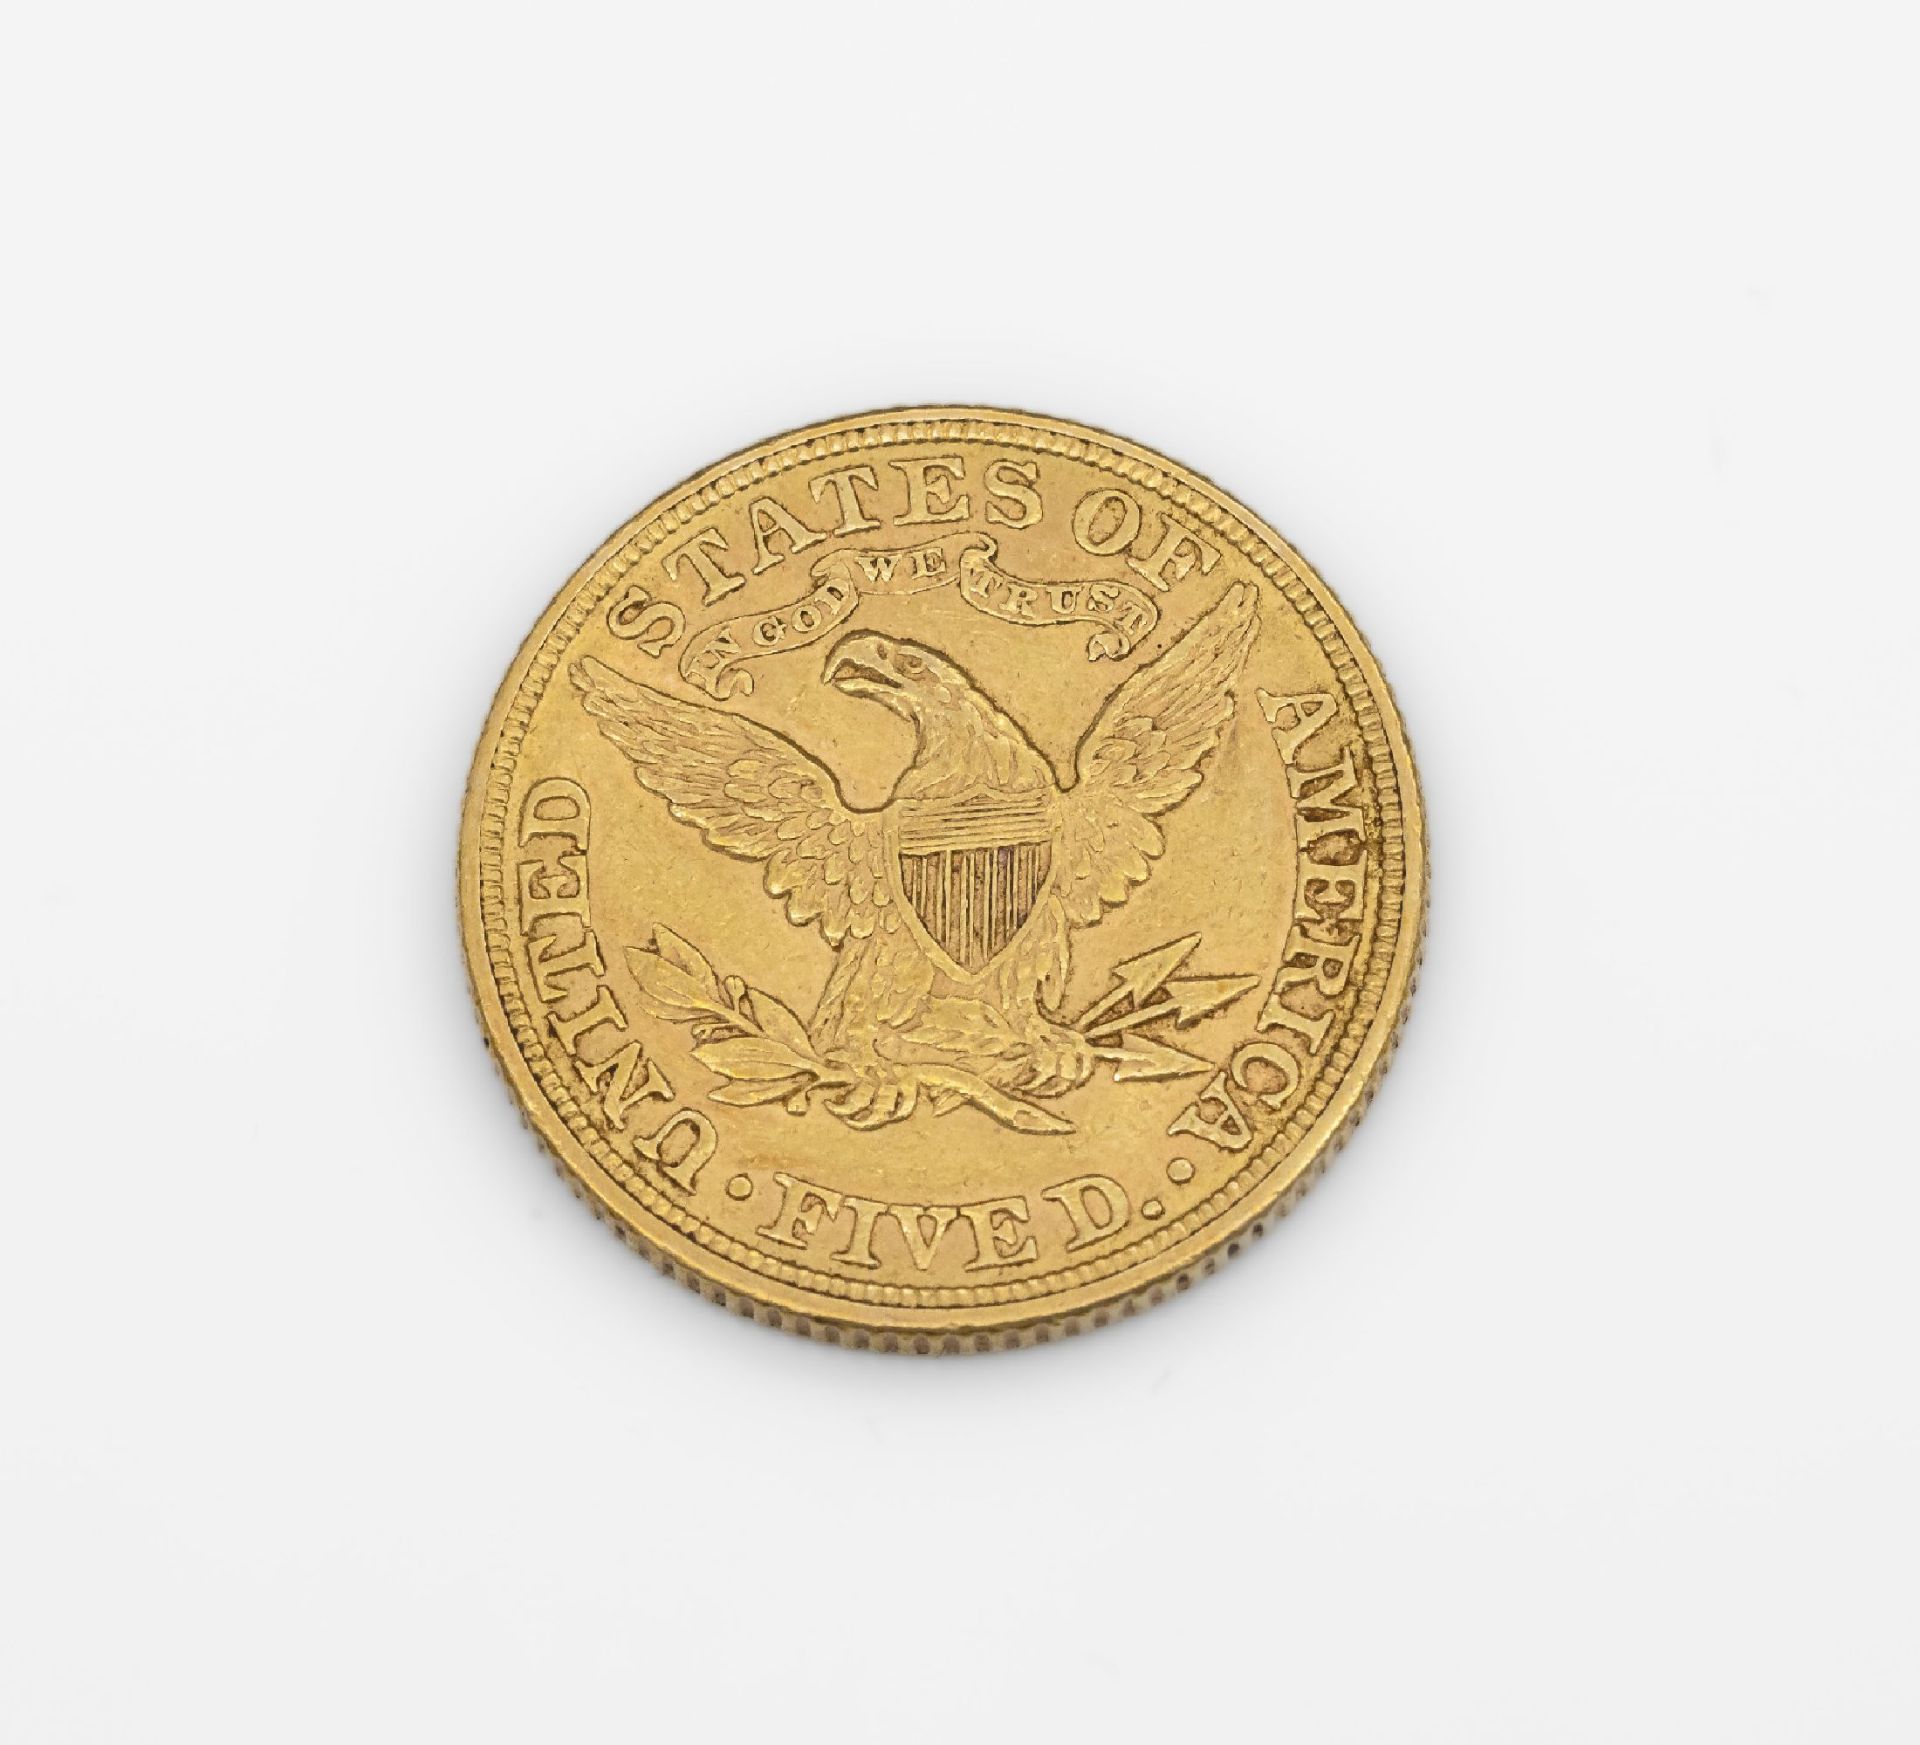 Goldmünze 5 Dollar USA 1880, Liberty Head und - Image 2 of 2